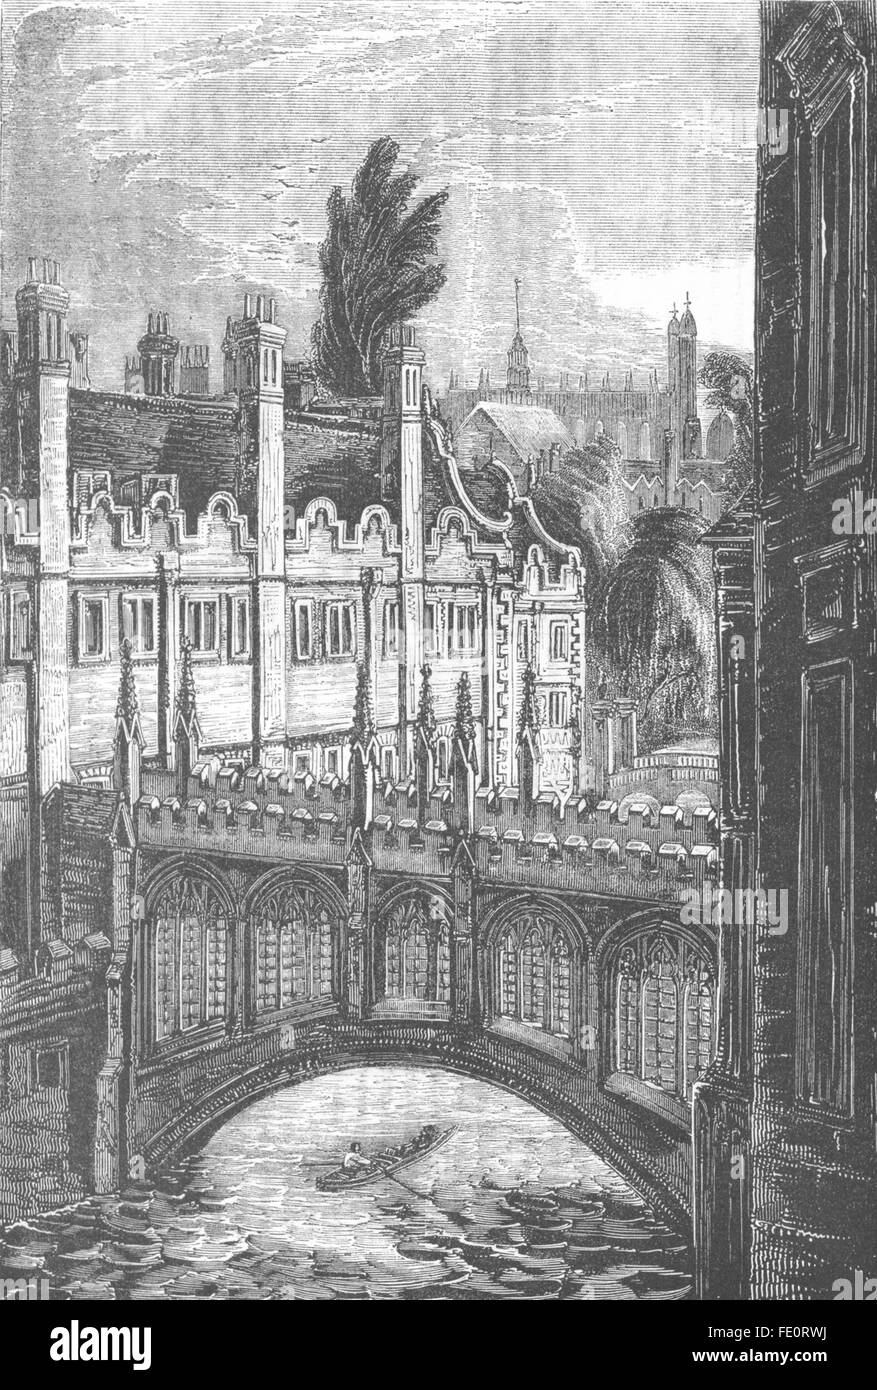 CAMBRIDGE: Bridge connecting Colleges of St John's, antique print 1845 Stock Photo